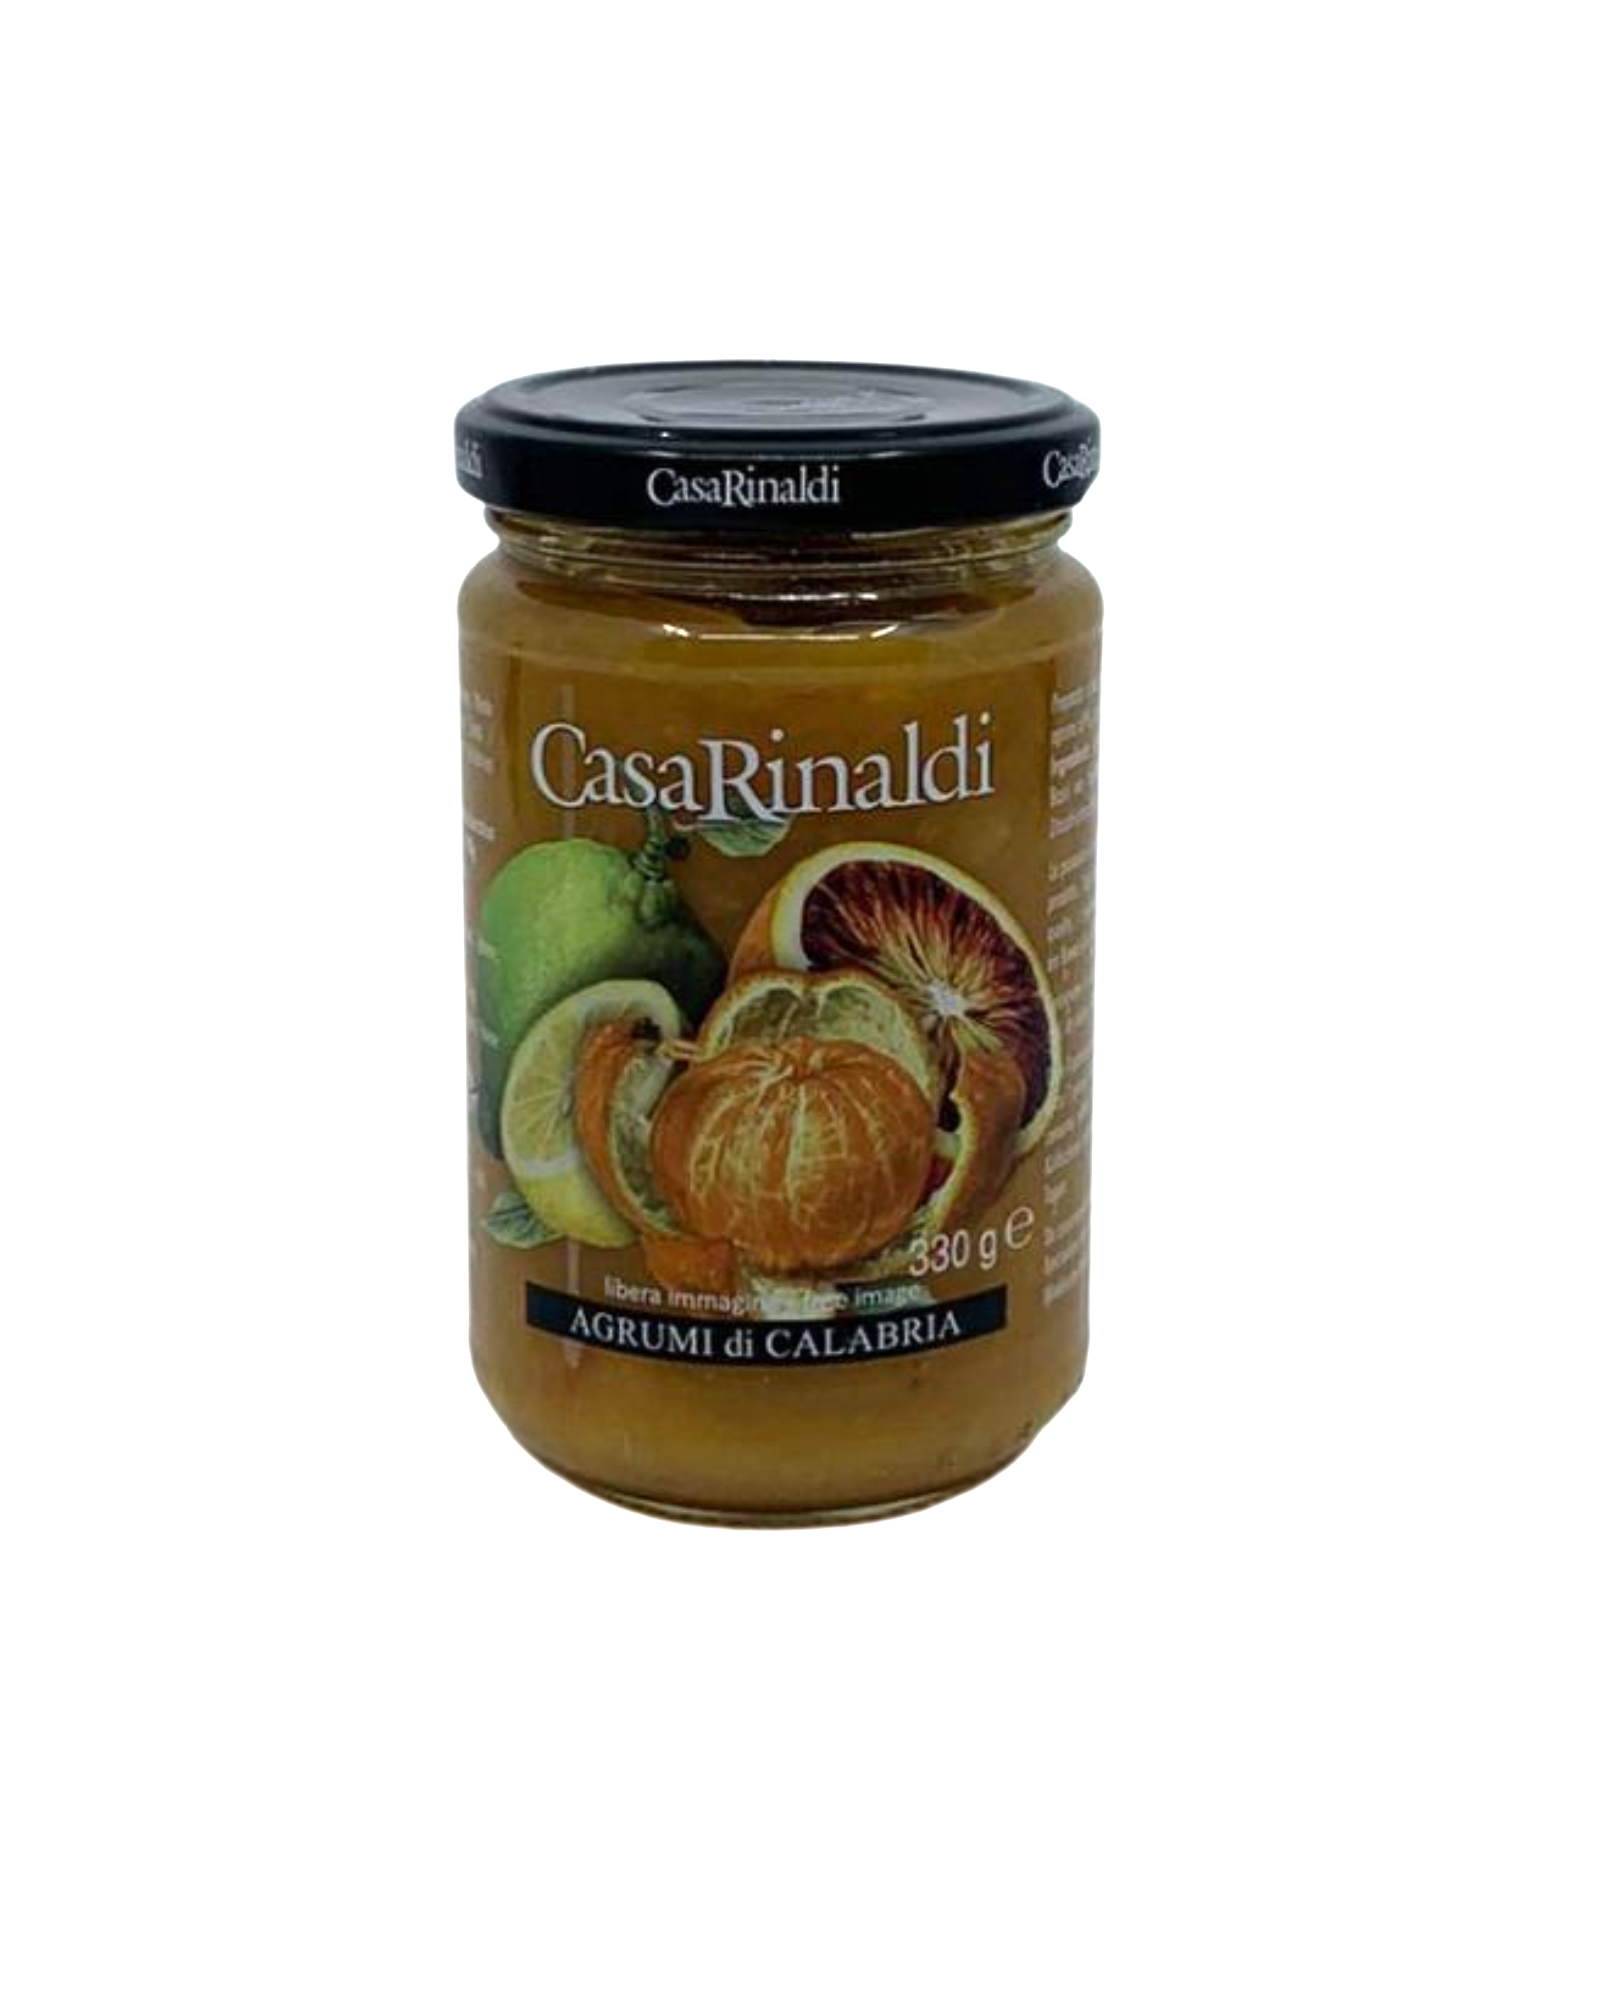 Italian citrus marmalade